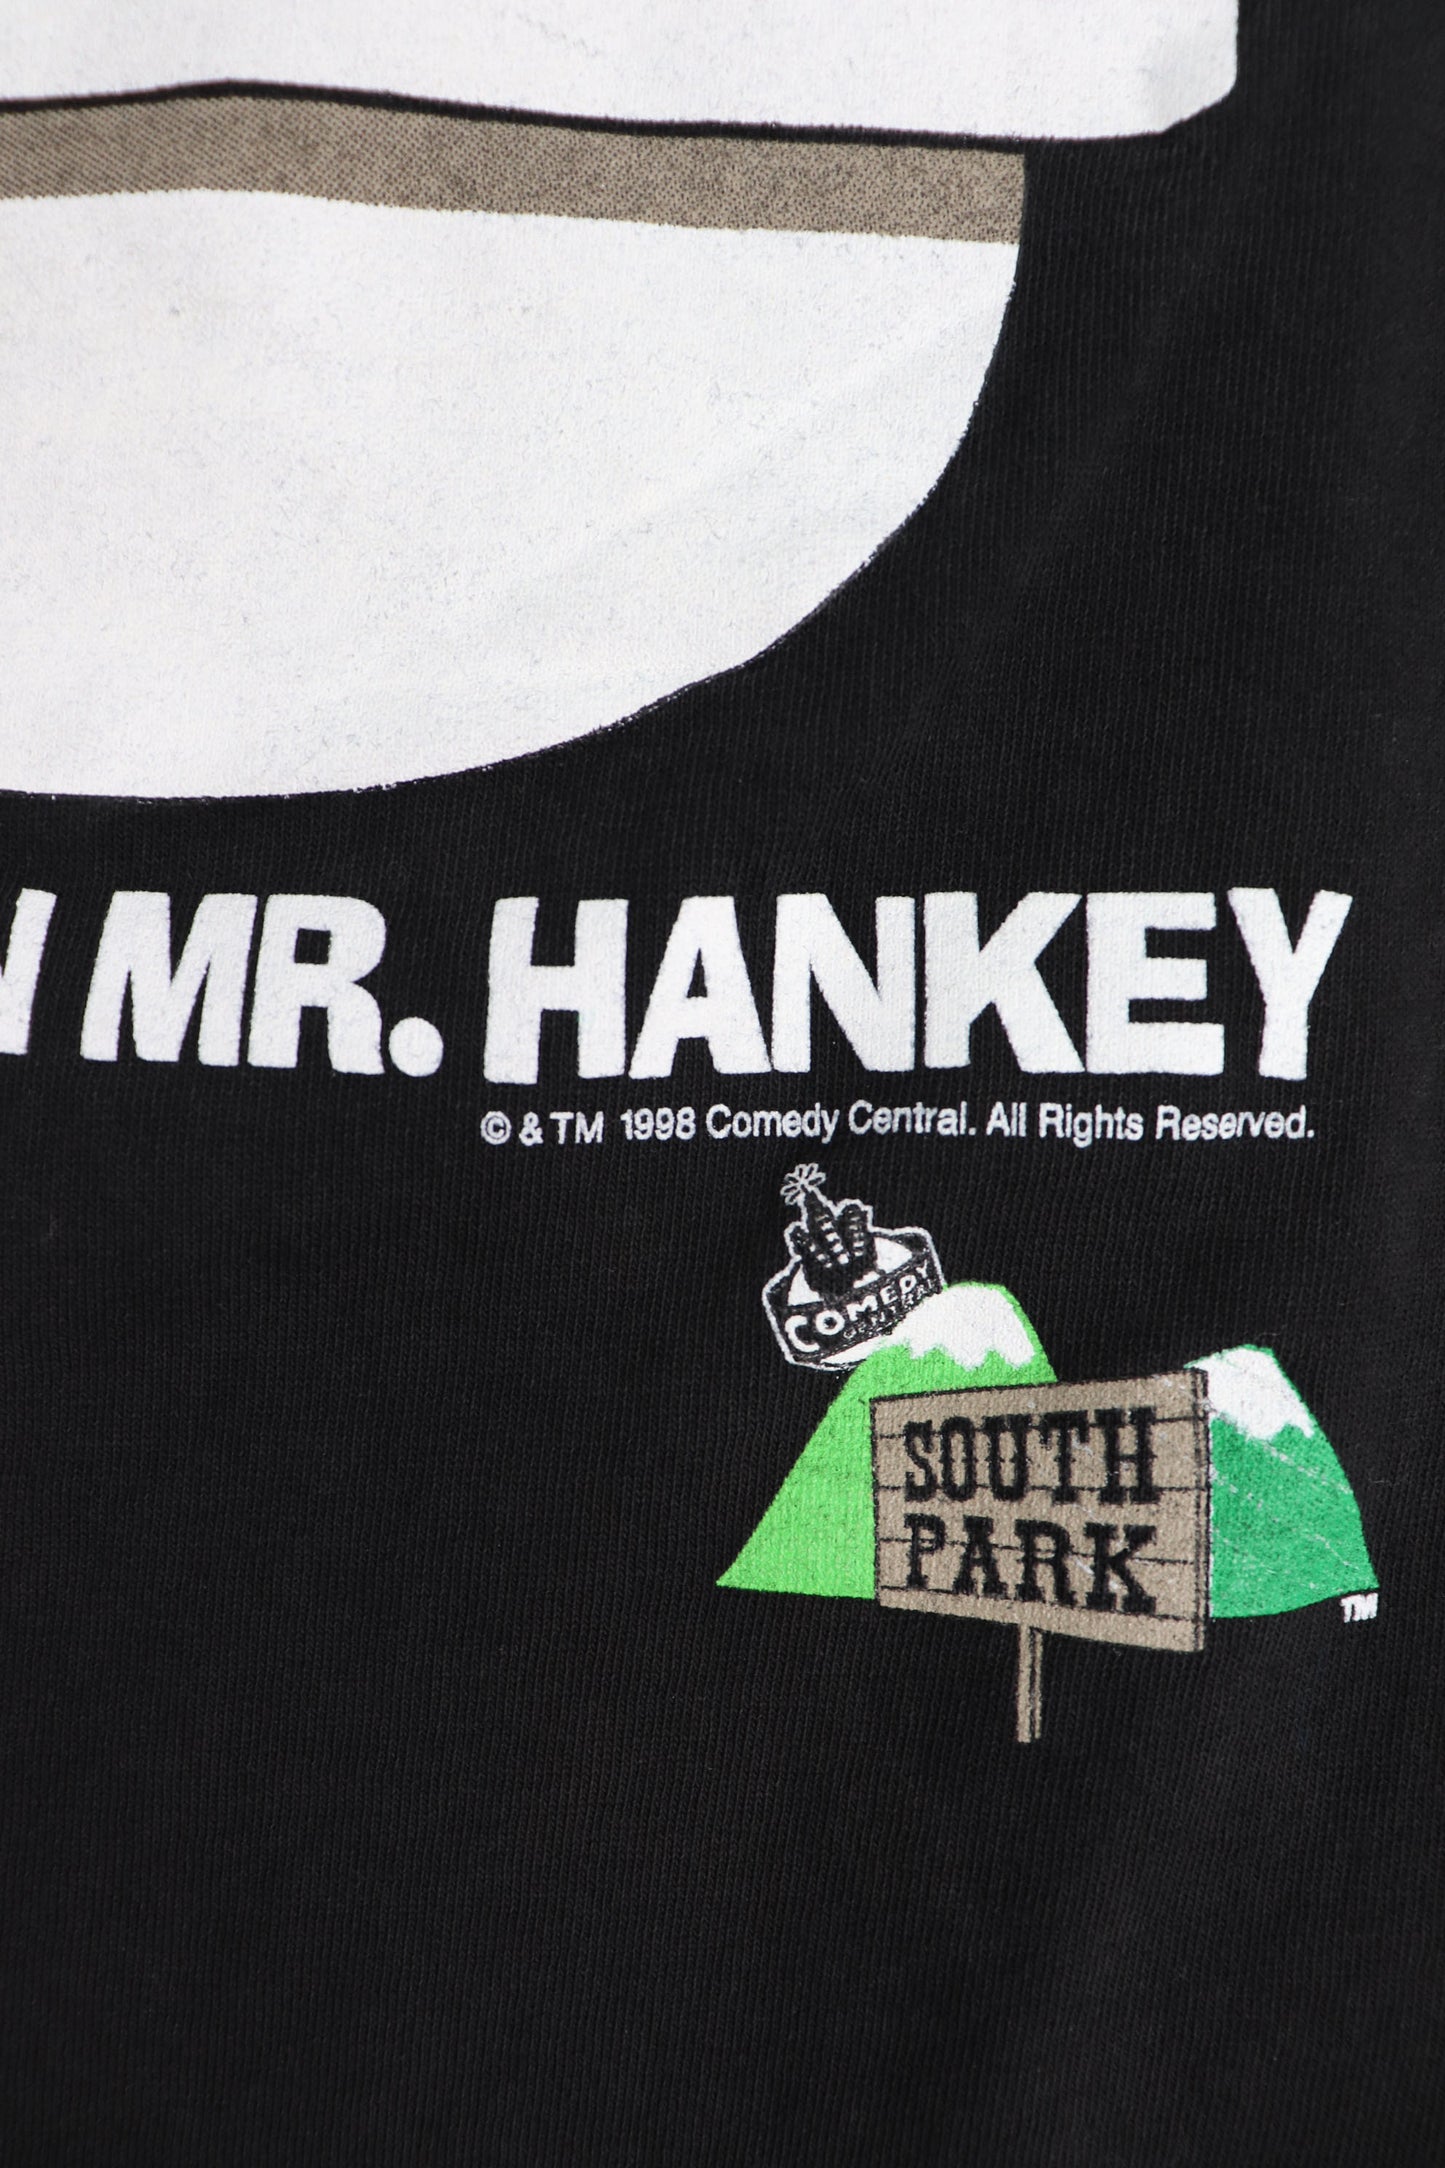 SOUTH PARK MR. HANKEY 1998